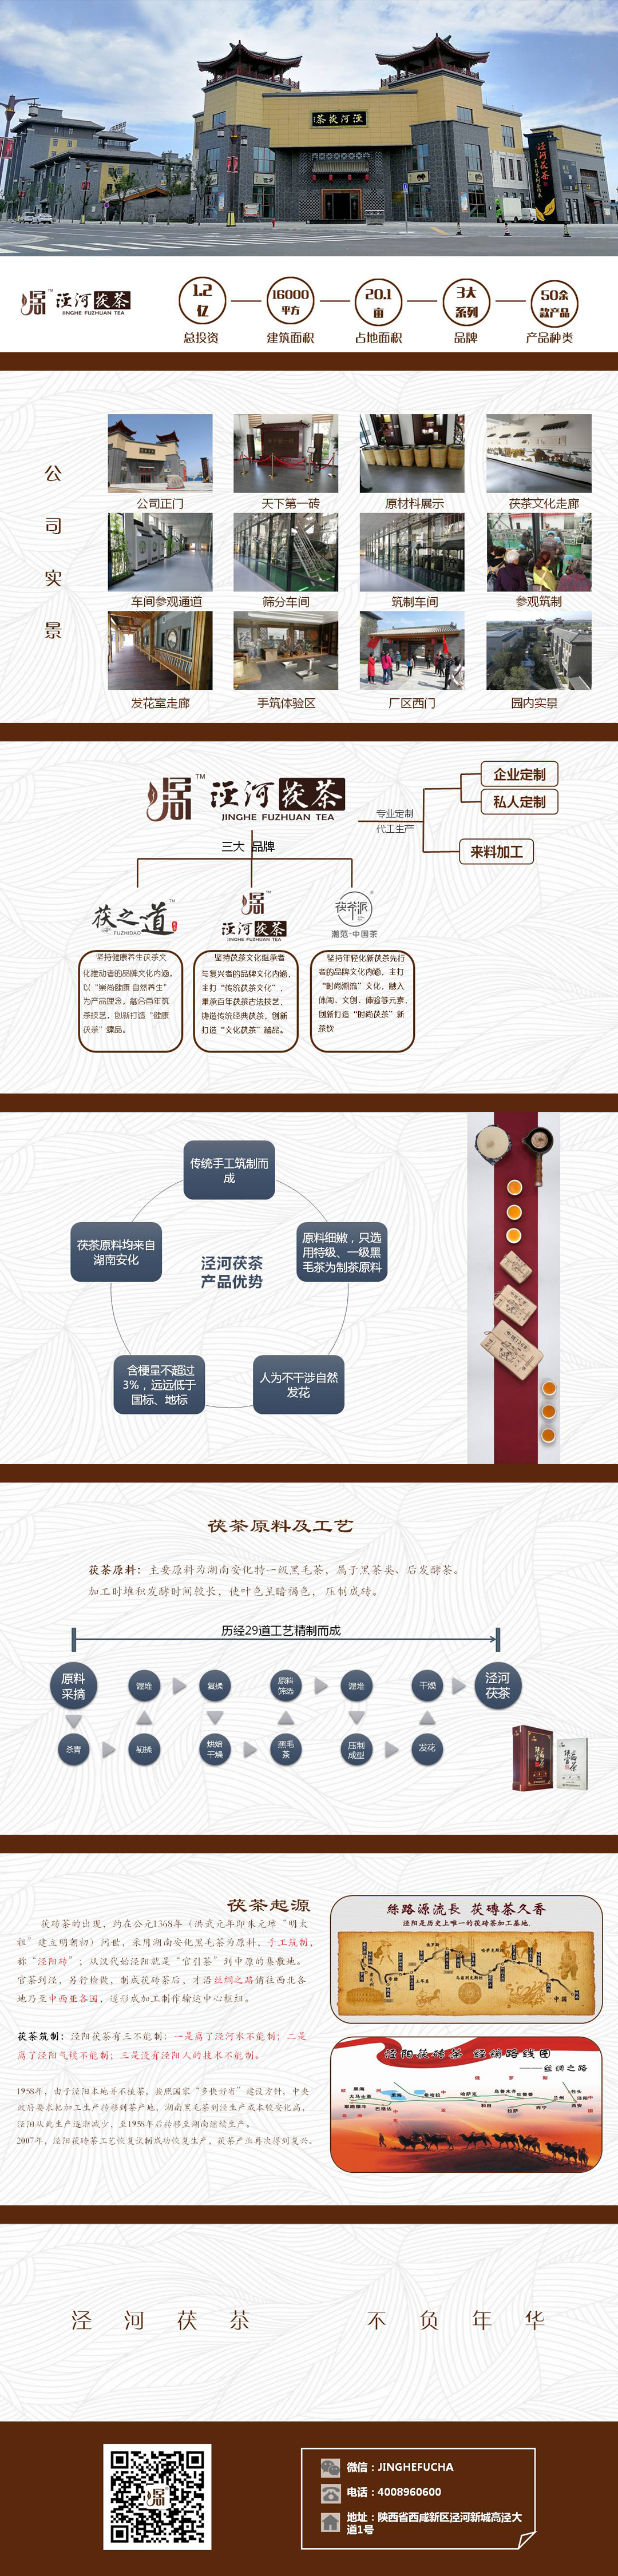 long-龙8(中国)唯一官网网站_image1140